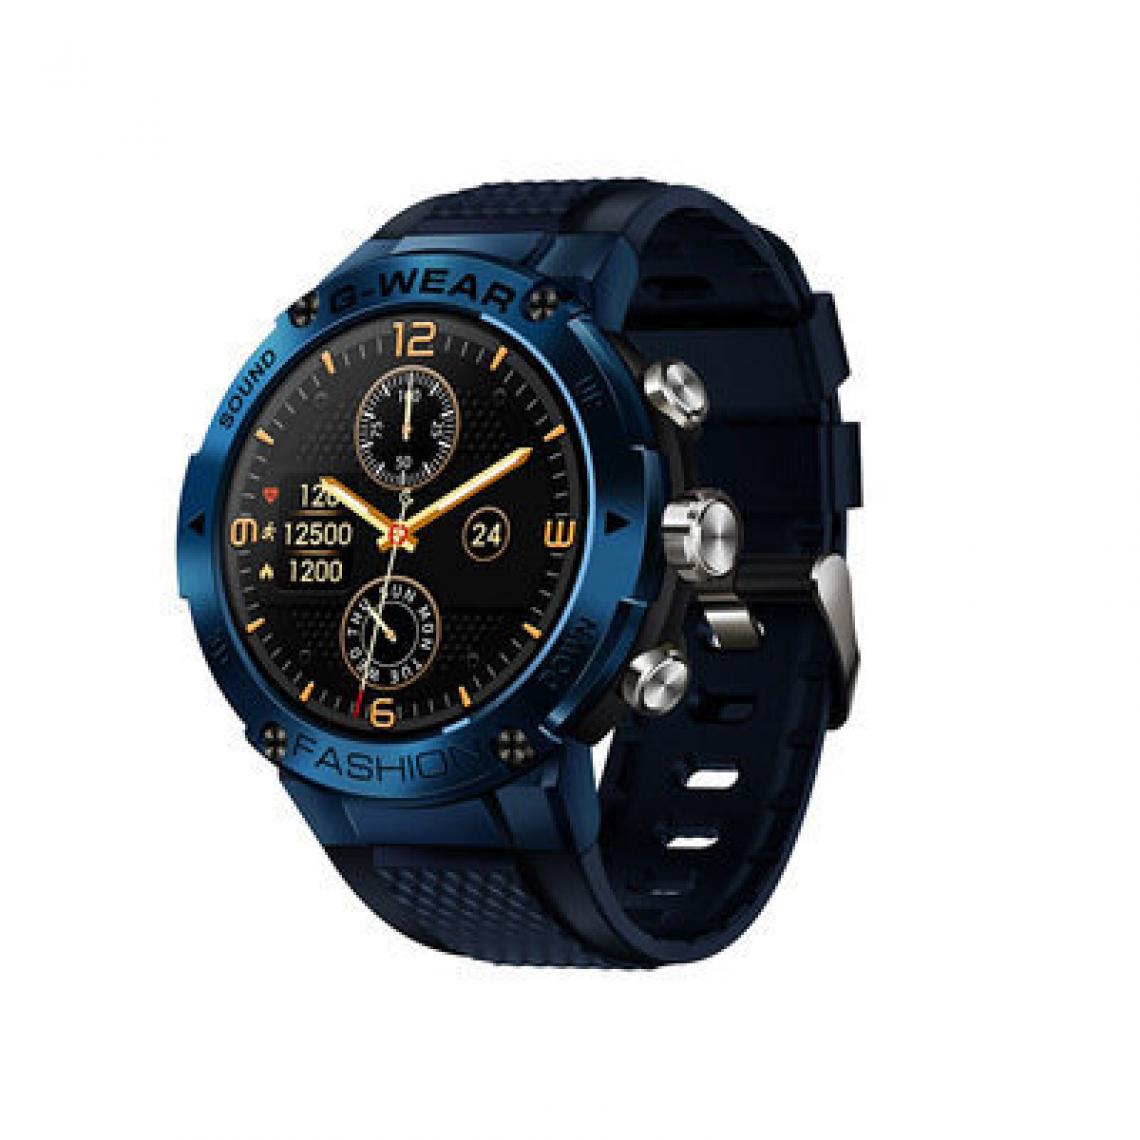 Chronotech Montres - Chronus Smart Watch 1.3 inch Smart Watch Full Digital Sport Watch with Military Grade Standard(Blue) - Montre connectée